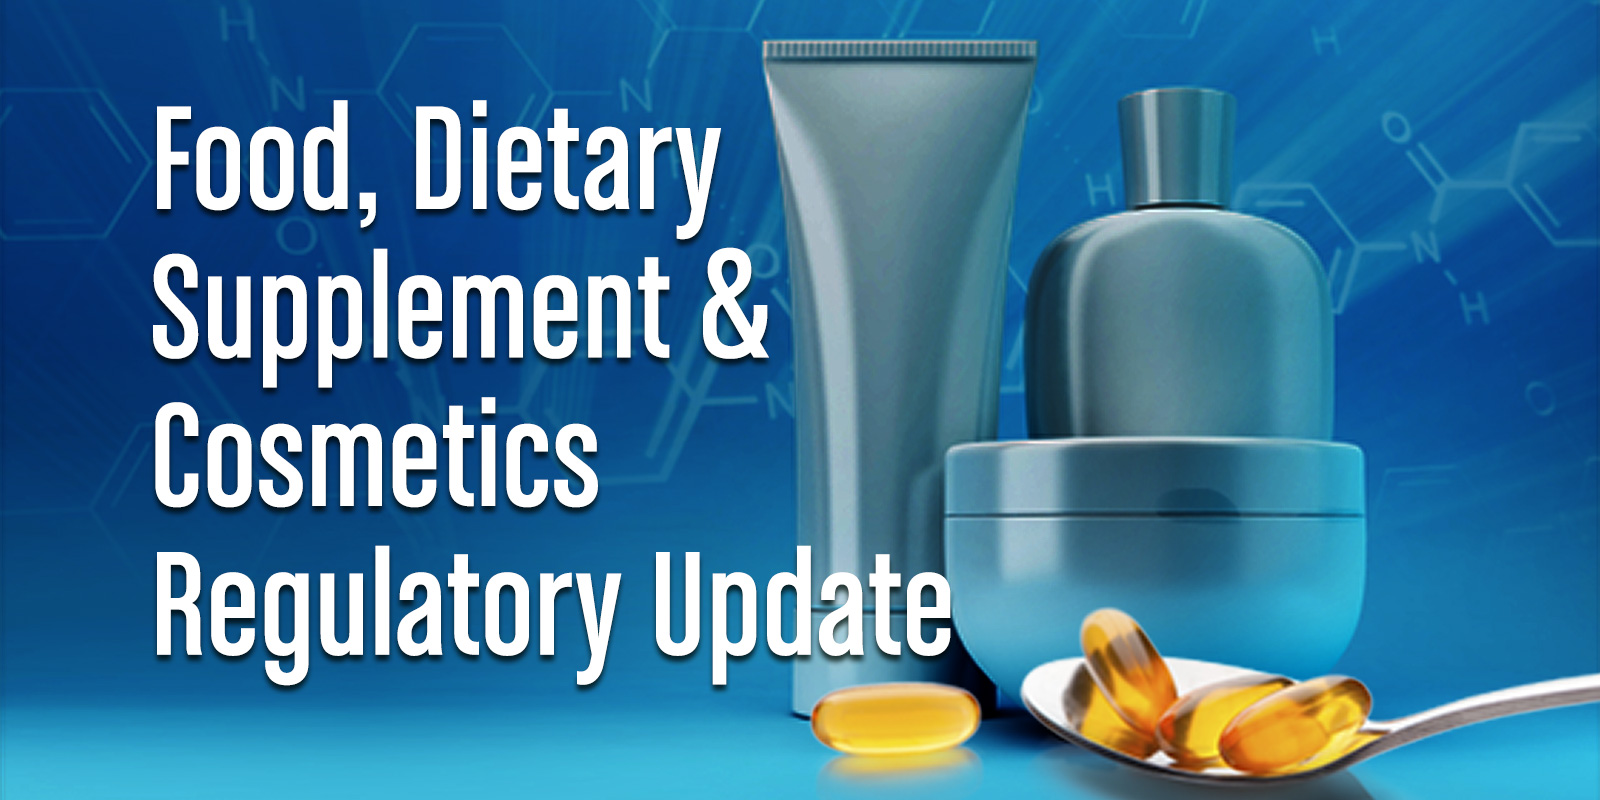 Food, Dietary Supplement & Cosmetics Regulatory Update | Vol. IV, Issue 2